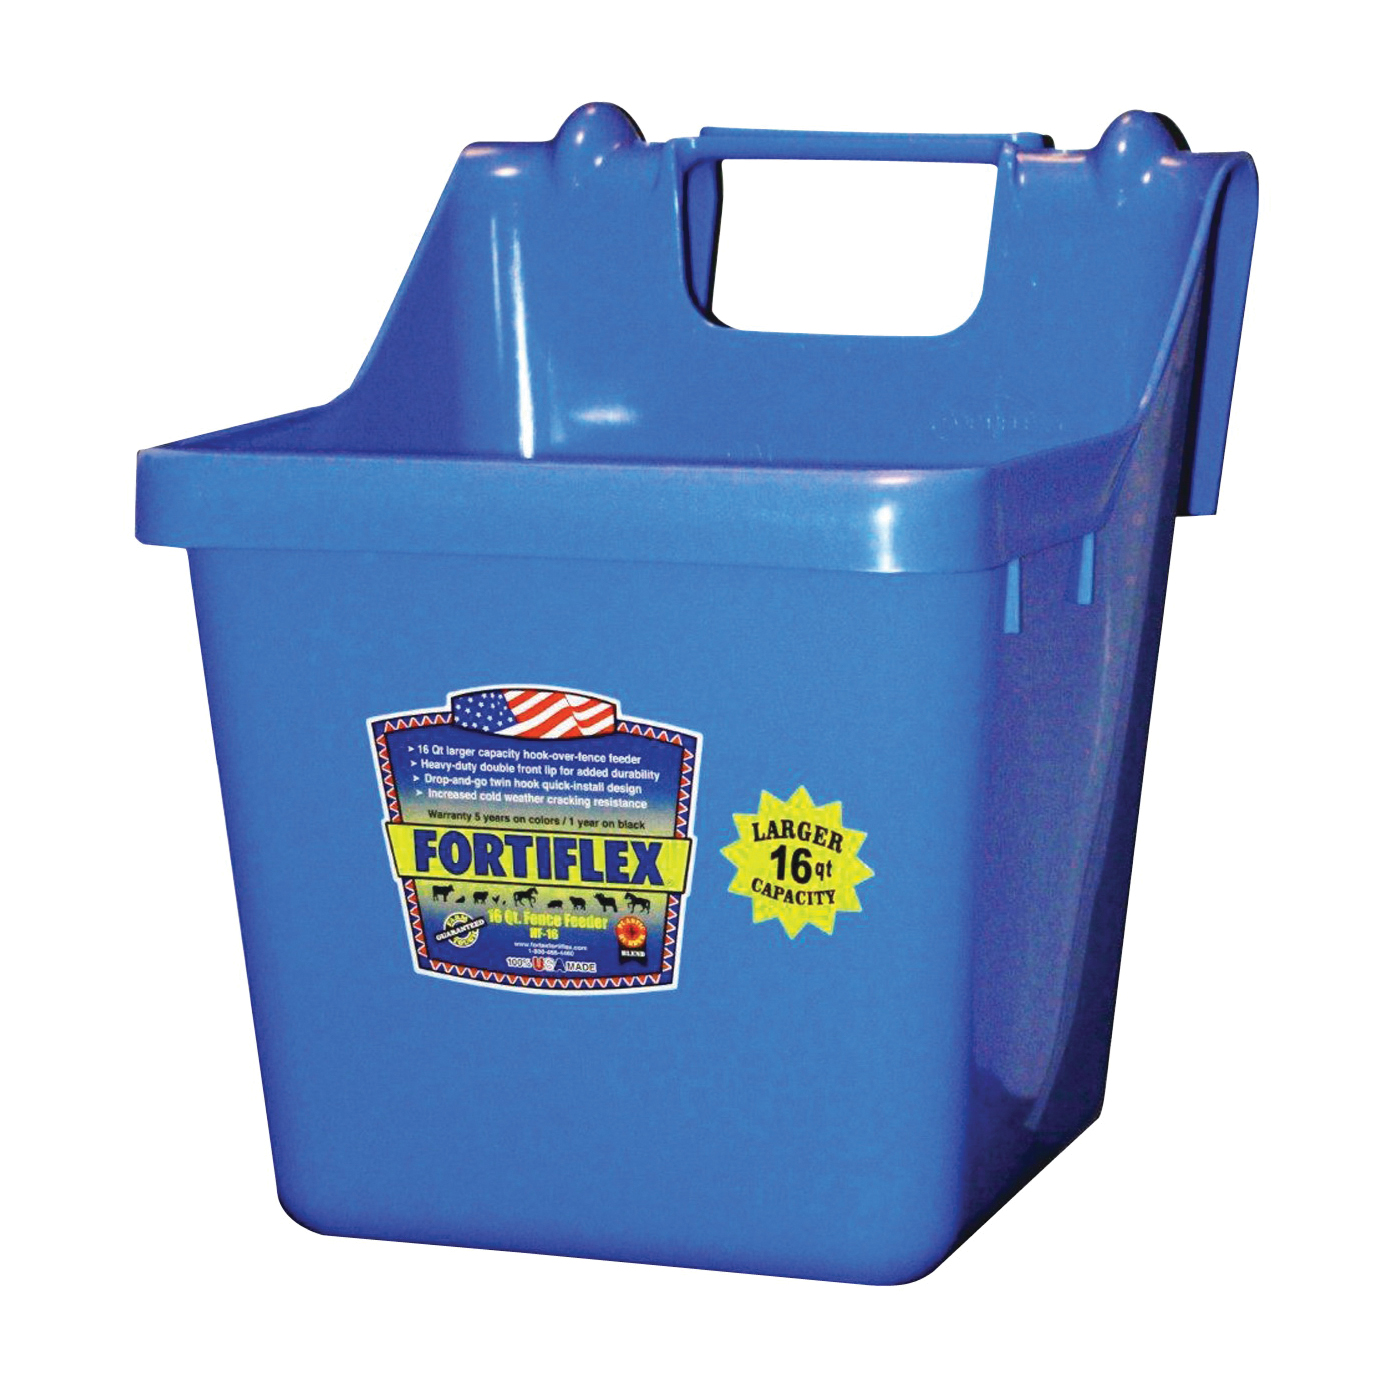 Fortex-Fortiflex 1301600 Bucket Feeder, 16 qt Volume, Fortalloy Rubber Polymer, Blue